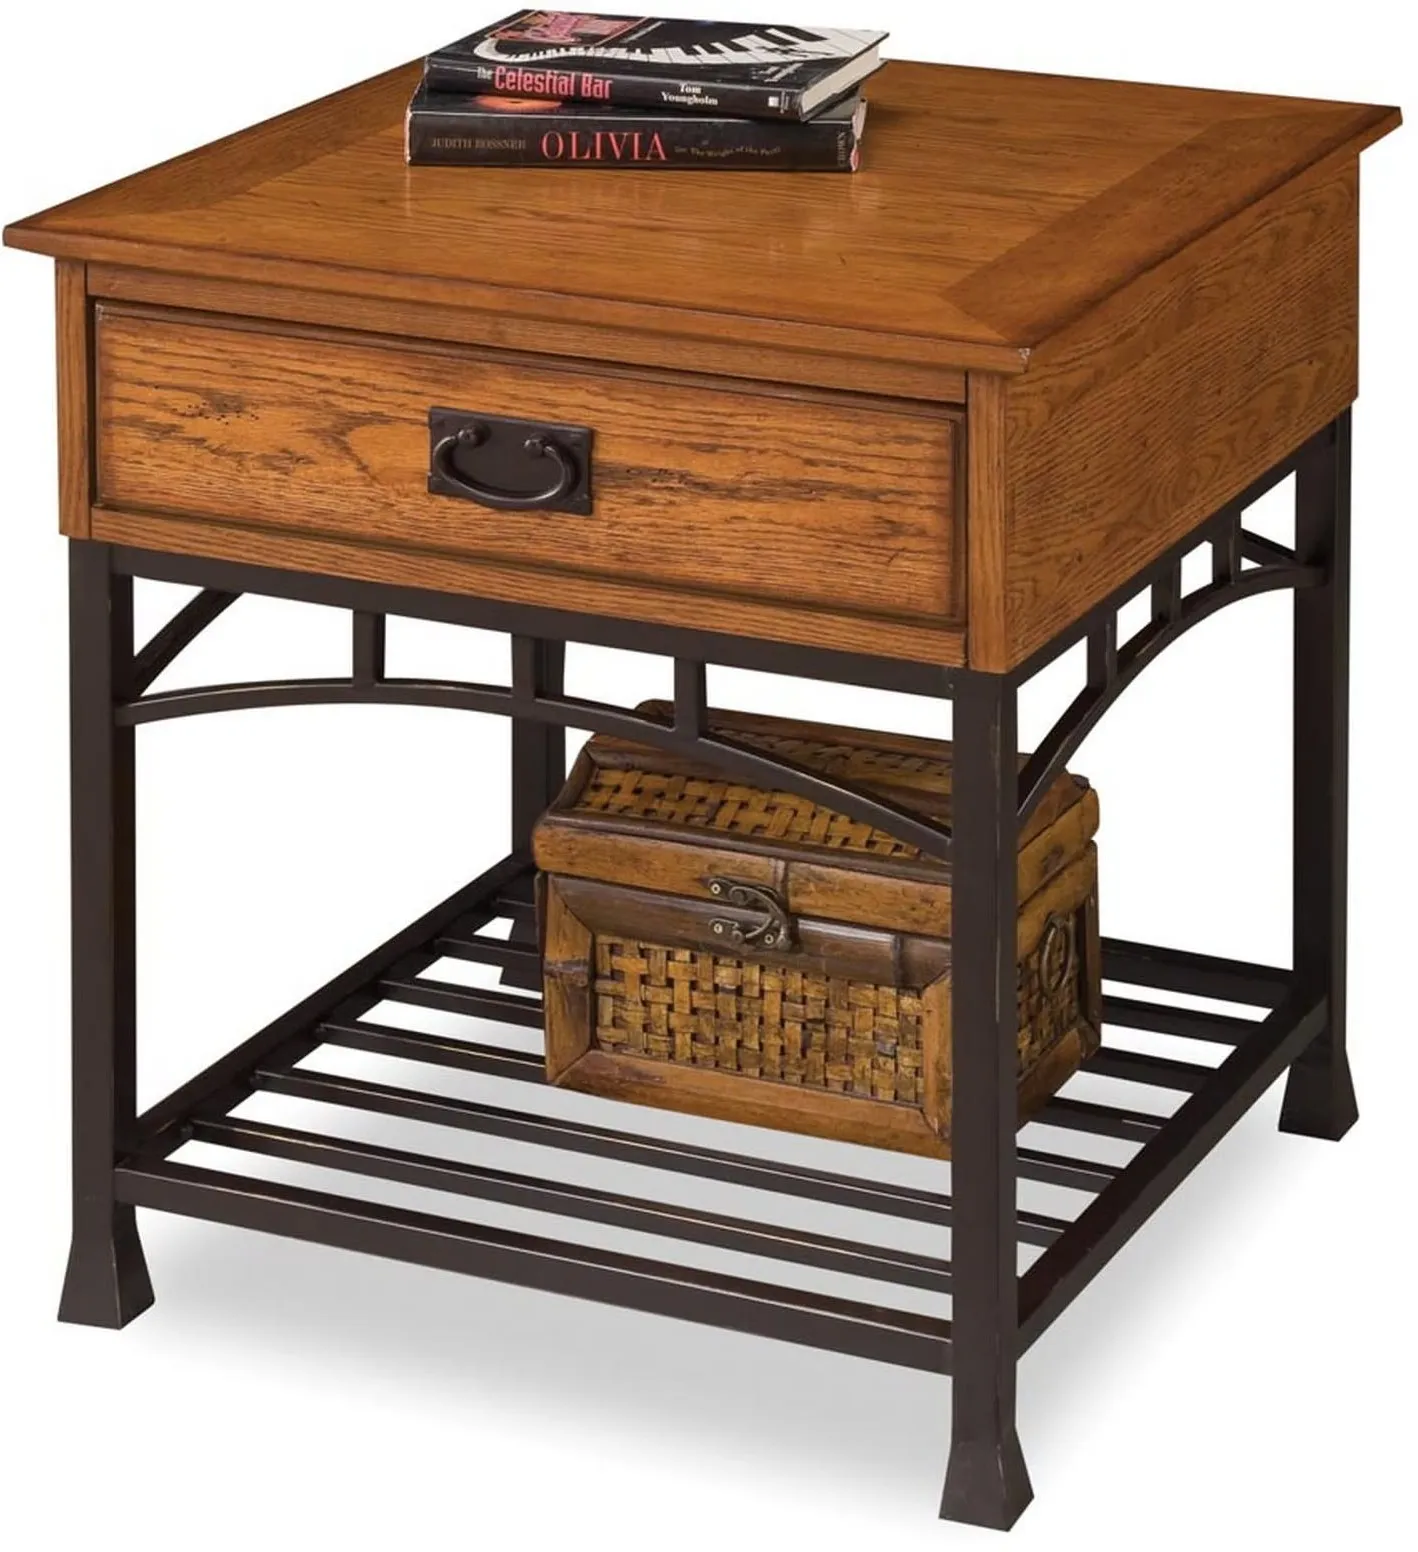 homestyles® Modern Craftsman Brown End Table